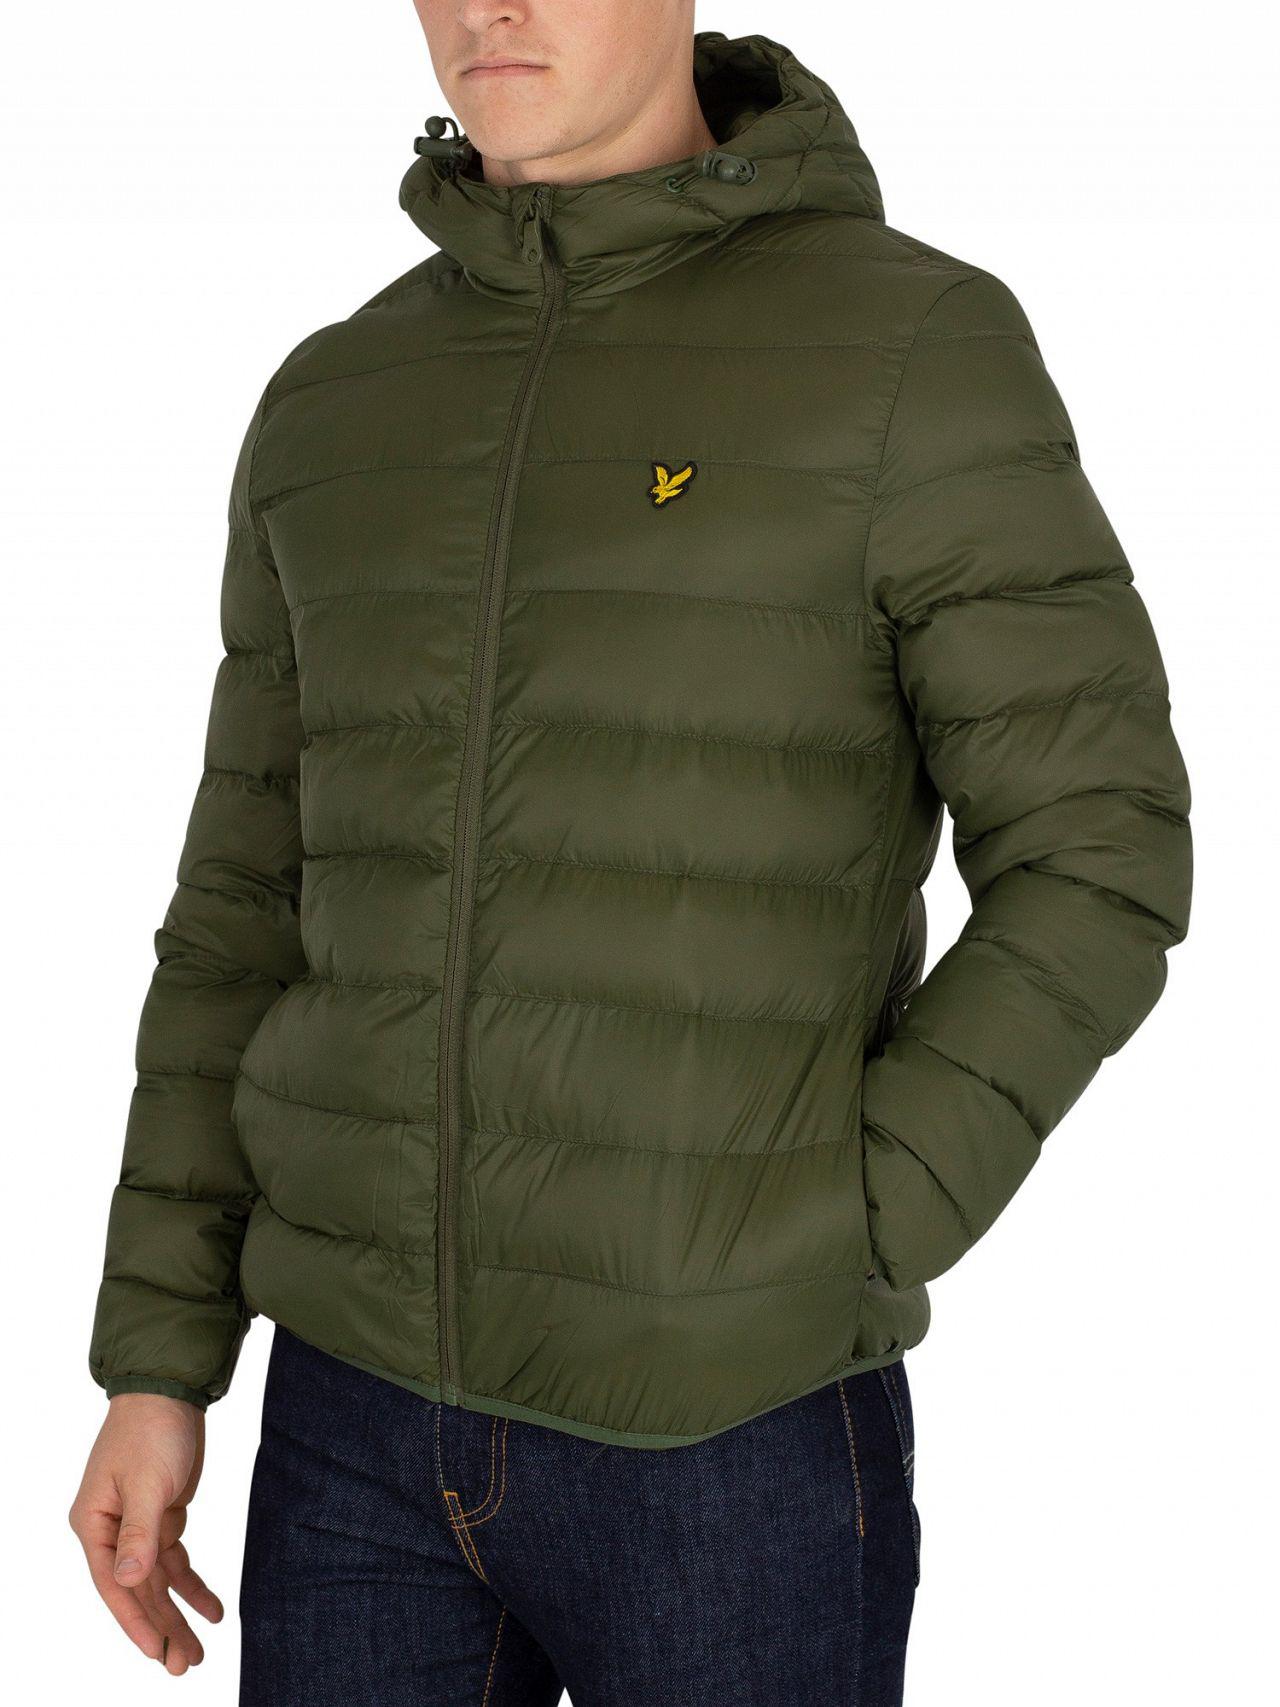 Lyle & Scott Synthetic Lightweight Puffer Jacket in Green for Men - Lyst